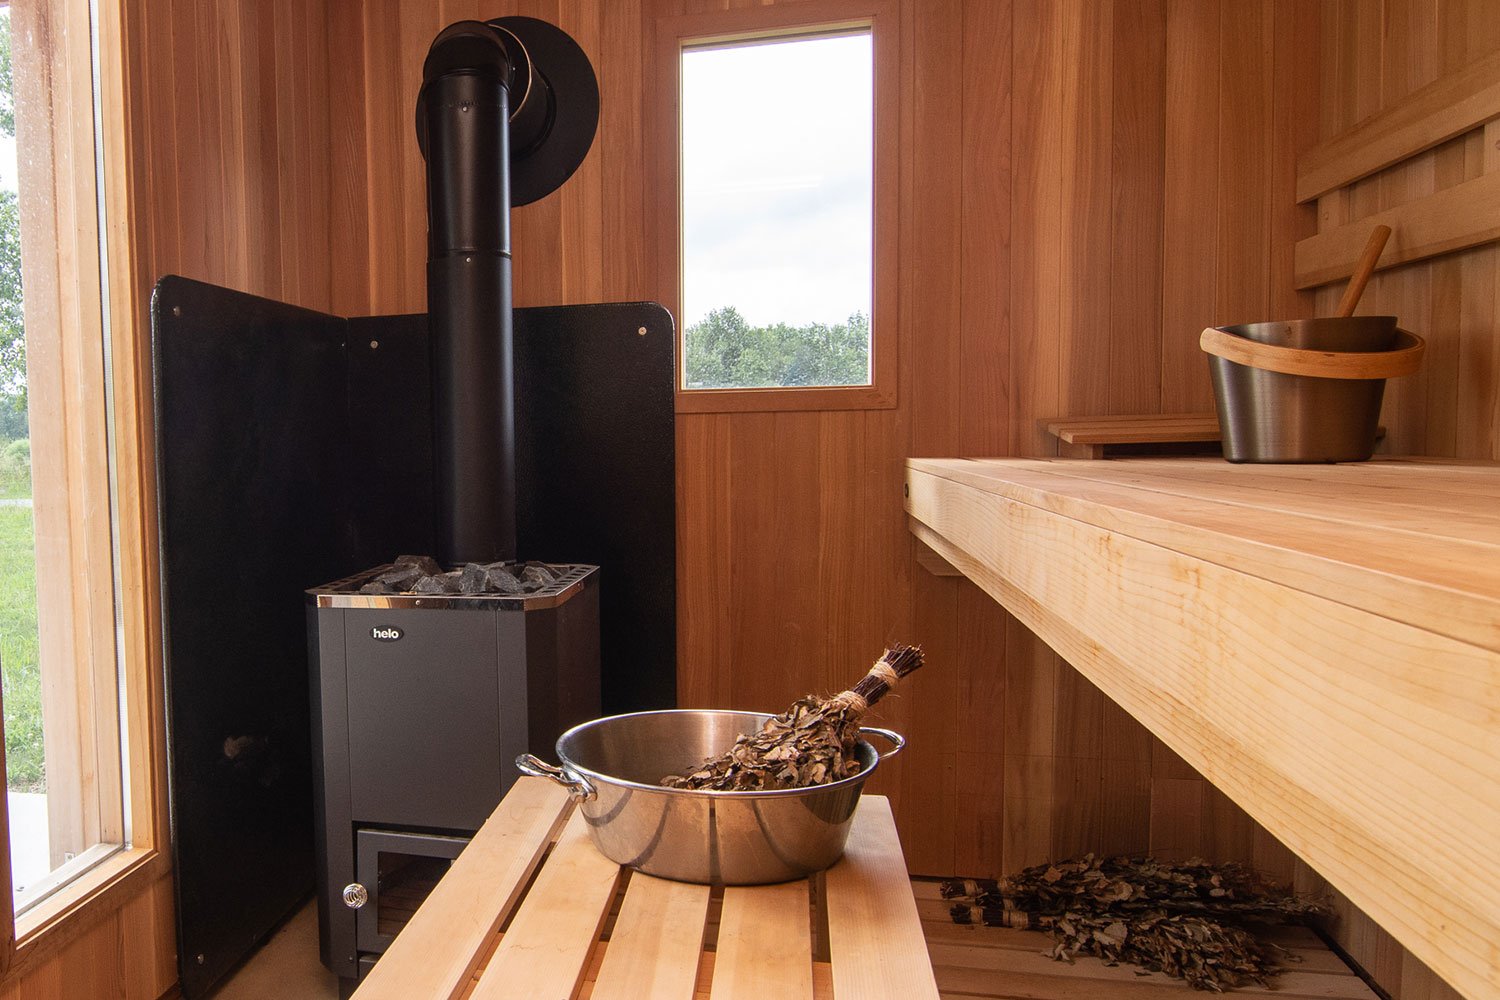 Kastor Woodburning Sauna Heaters, by Helo